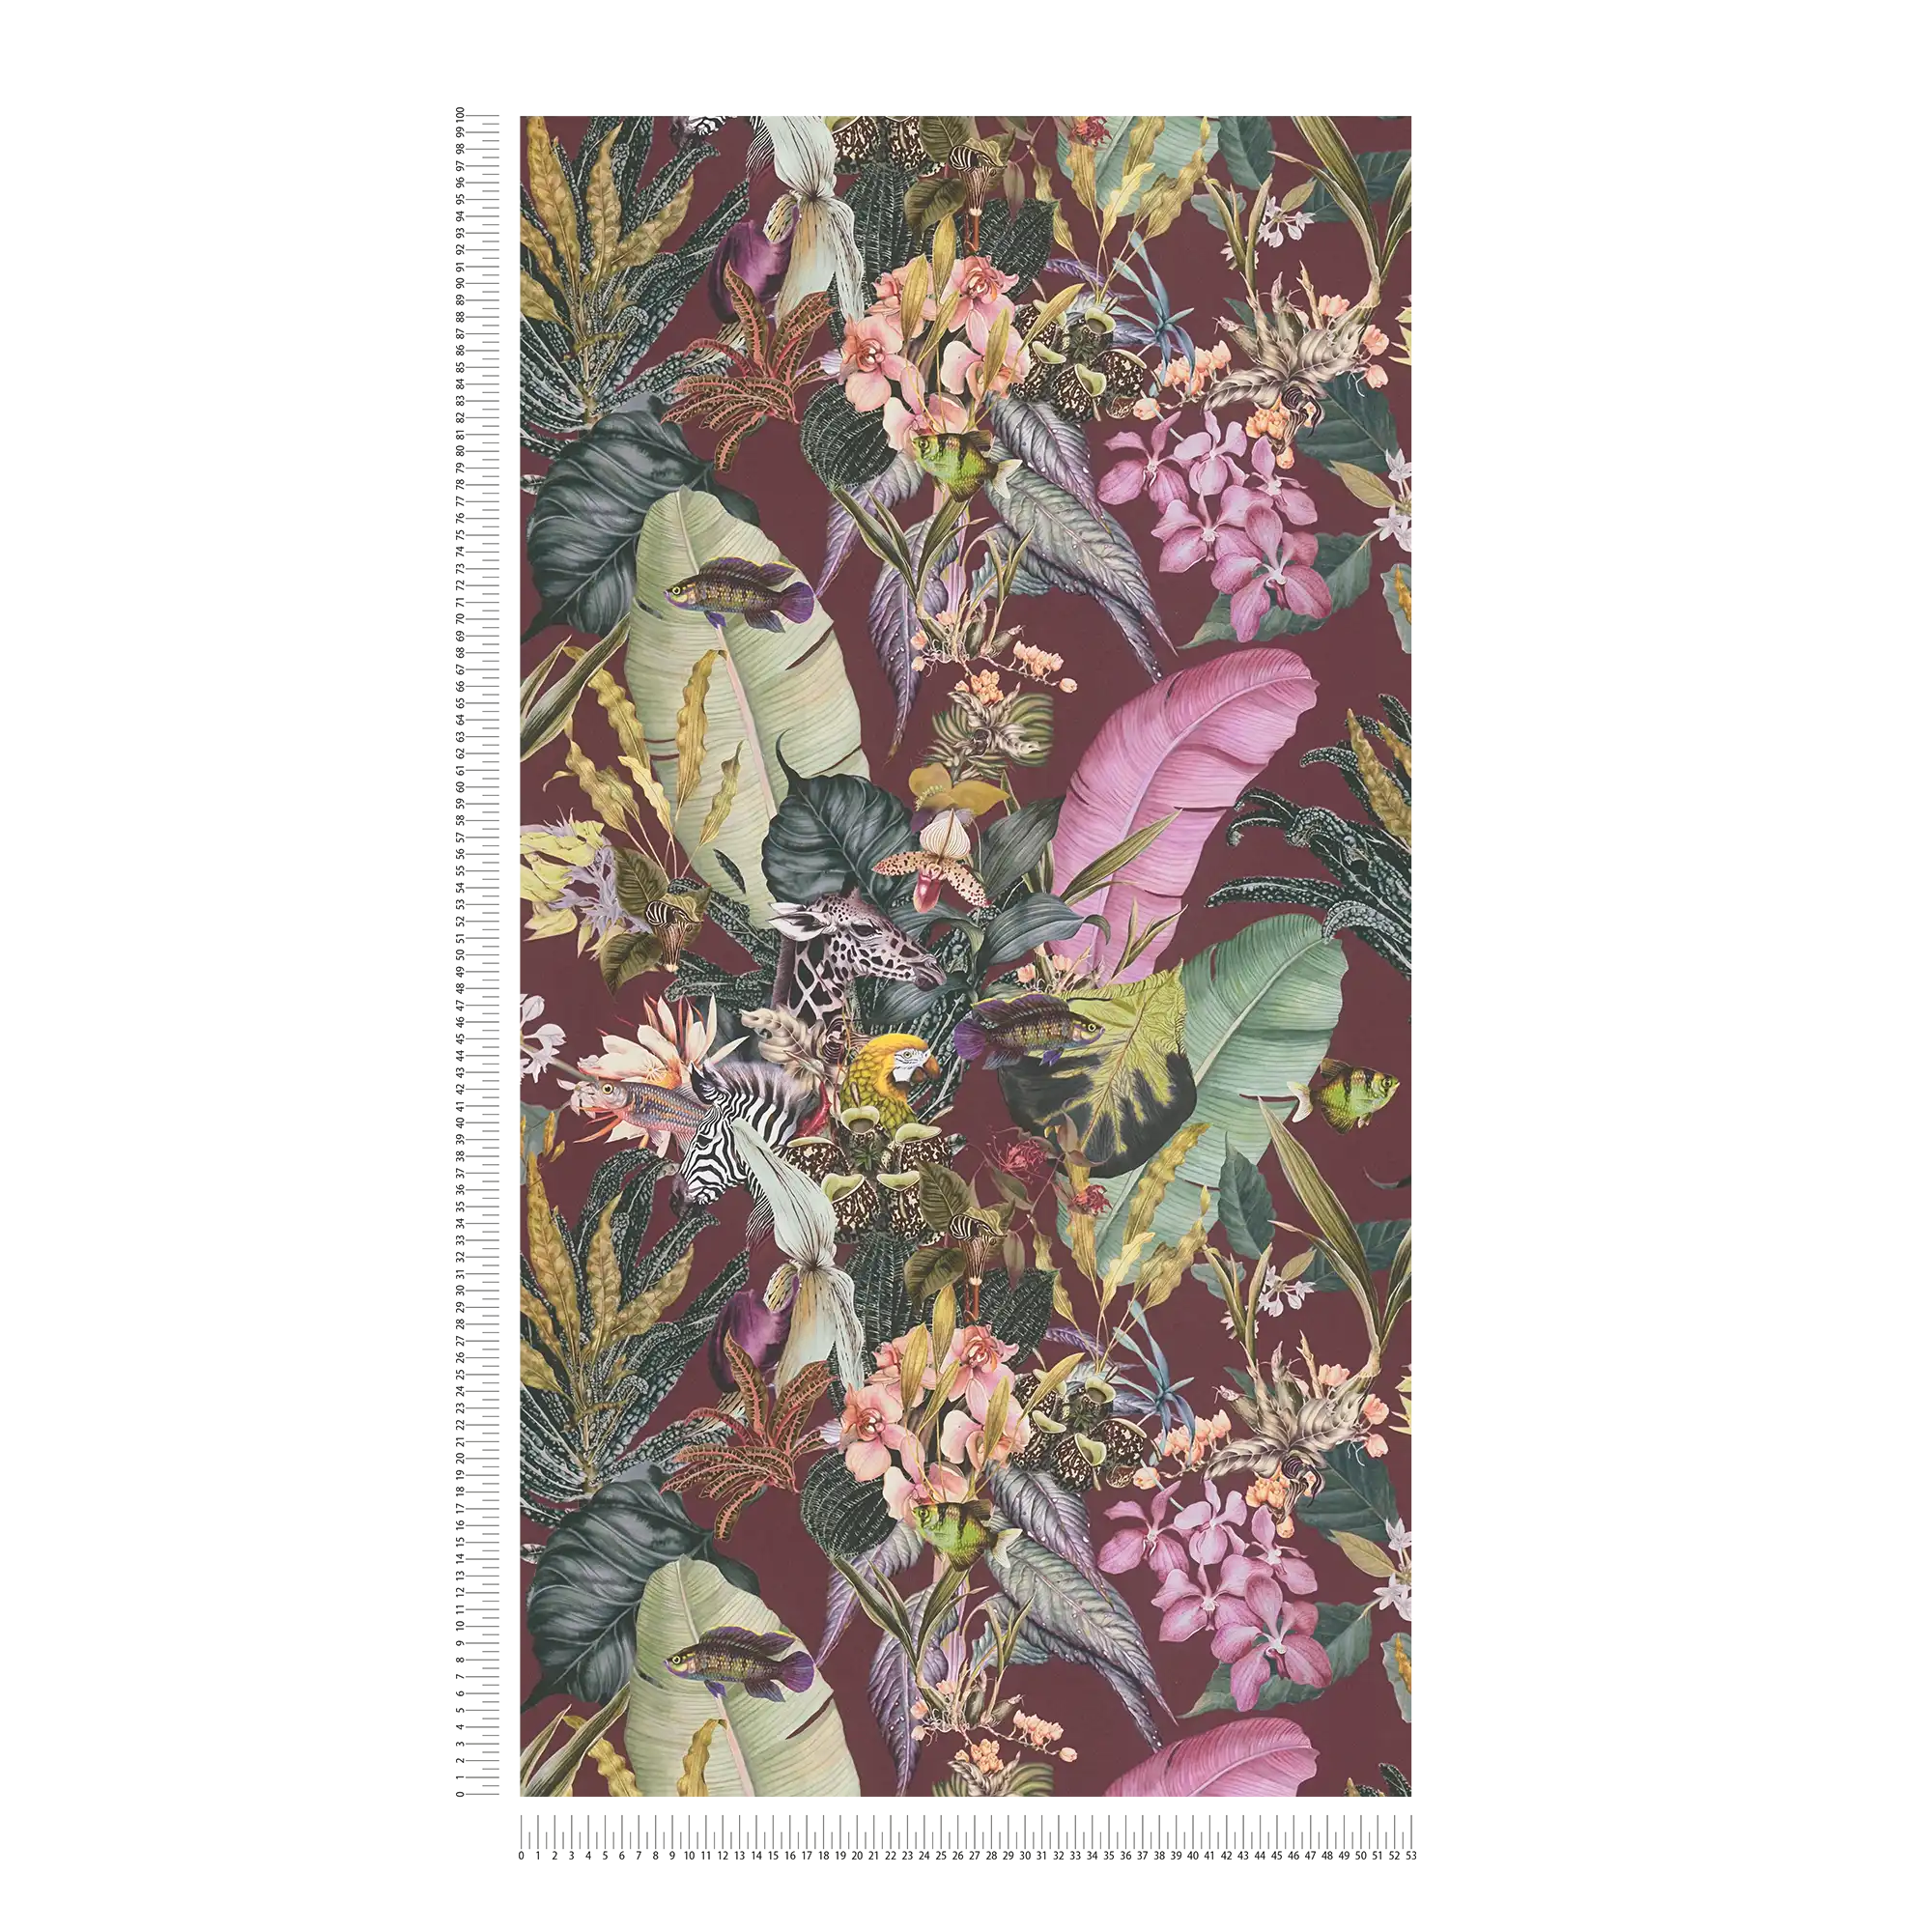             Jungle wallpaper flowers & animals - green, dark red
        